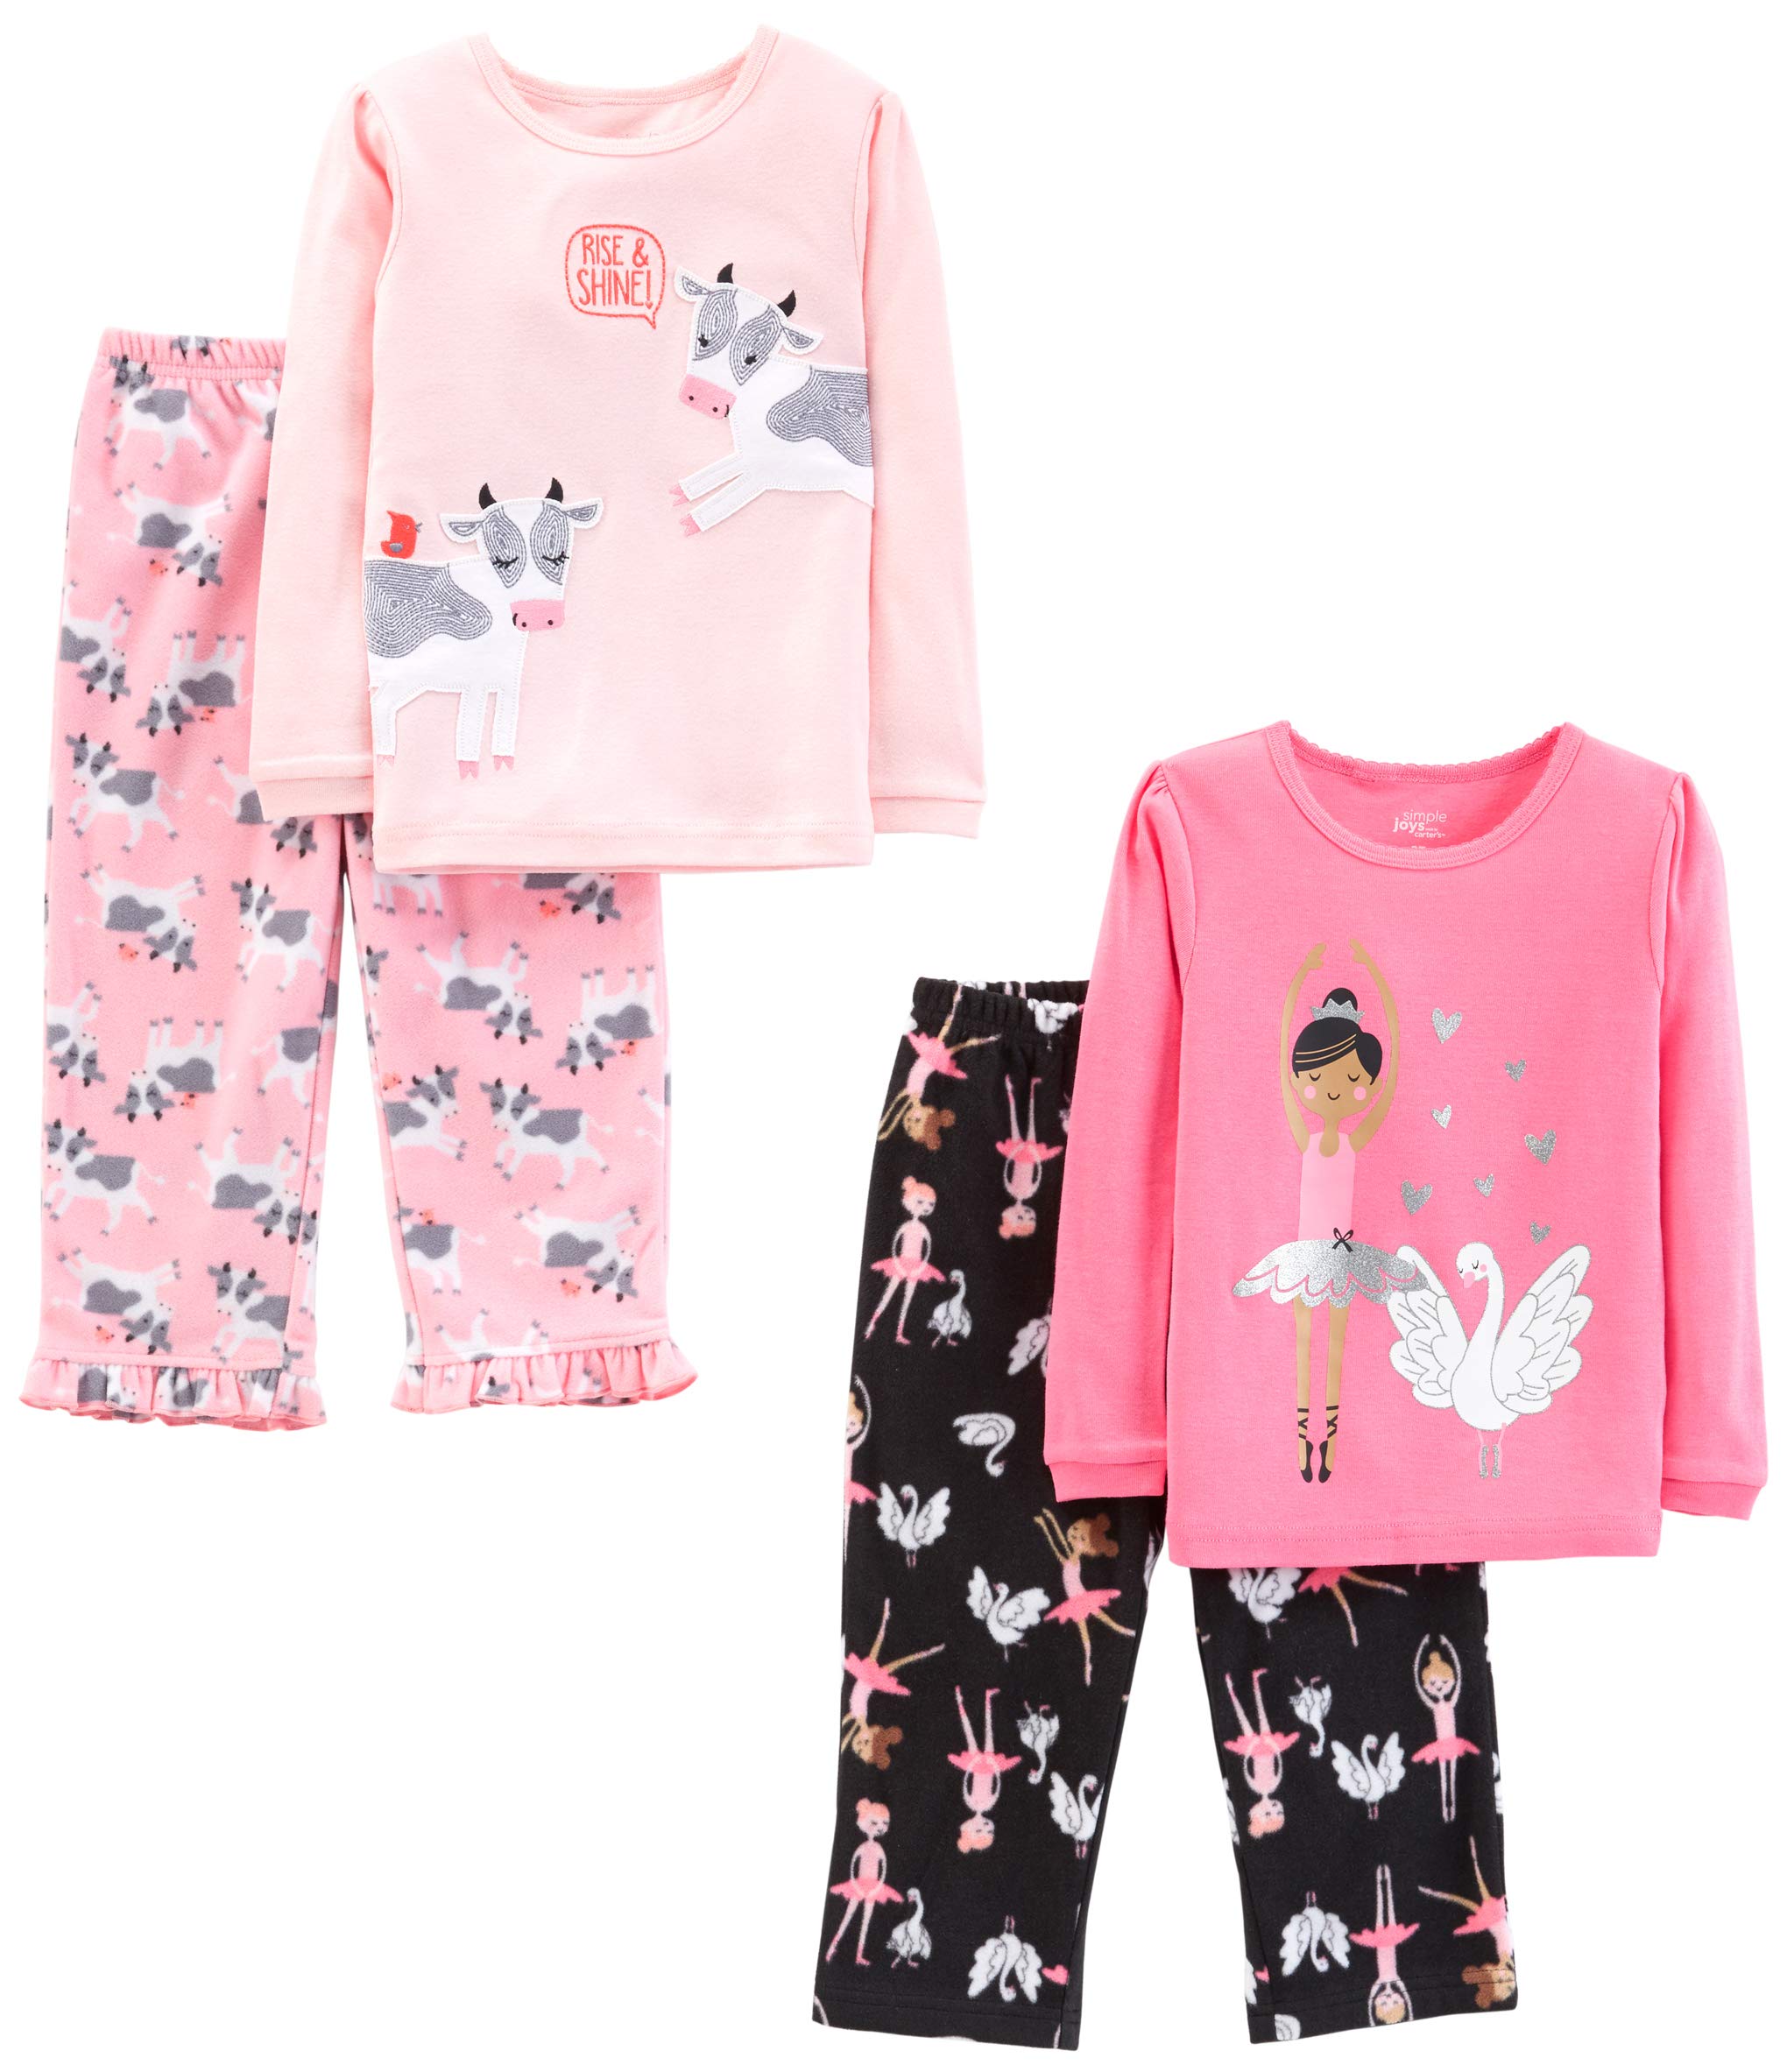 Simple Joys by Carter's Girls and Toddlers' 4-Piece Pajama Set (Cotton Top & Fleece Bottom)